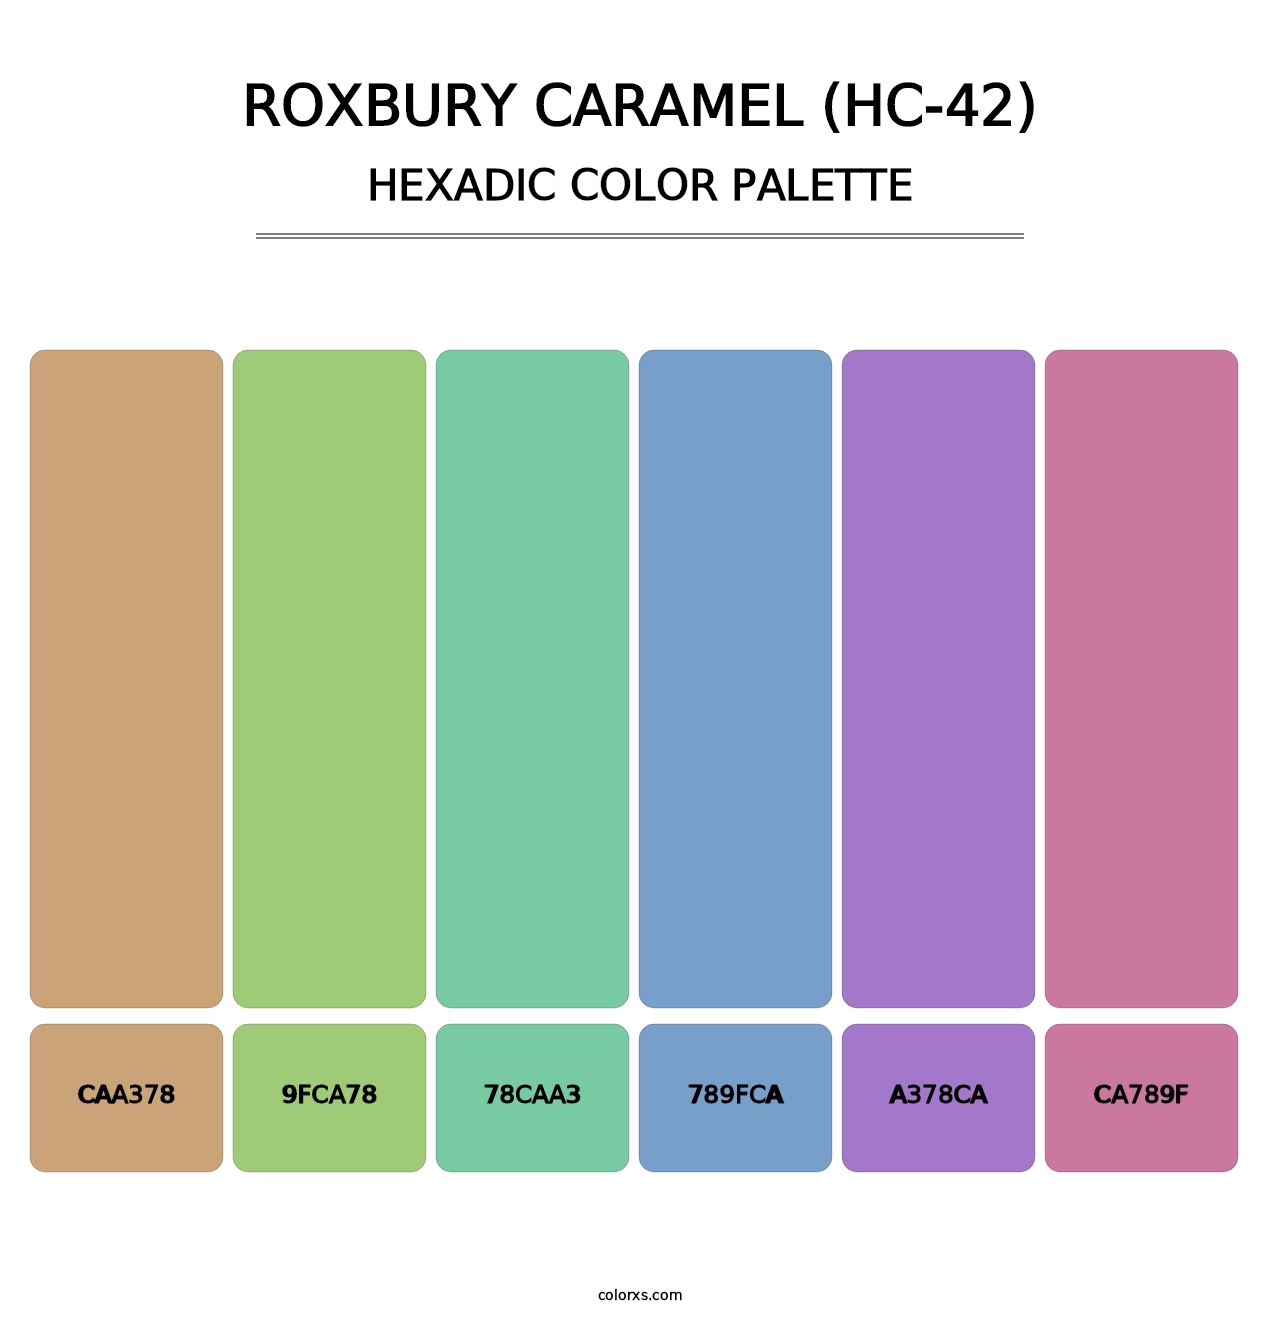 Roxbury Caramel (HC-42) - Hexadic Color Palette